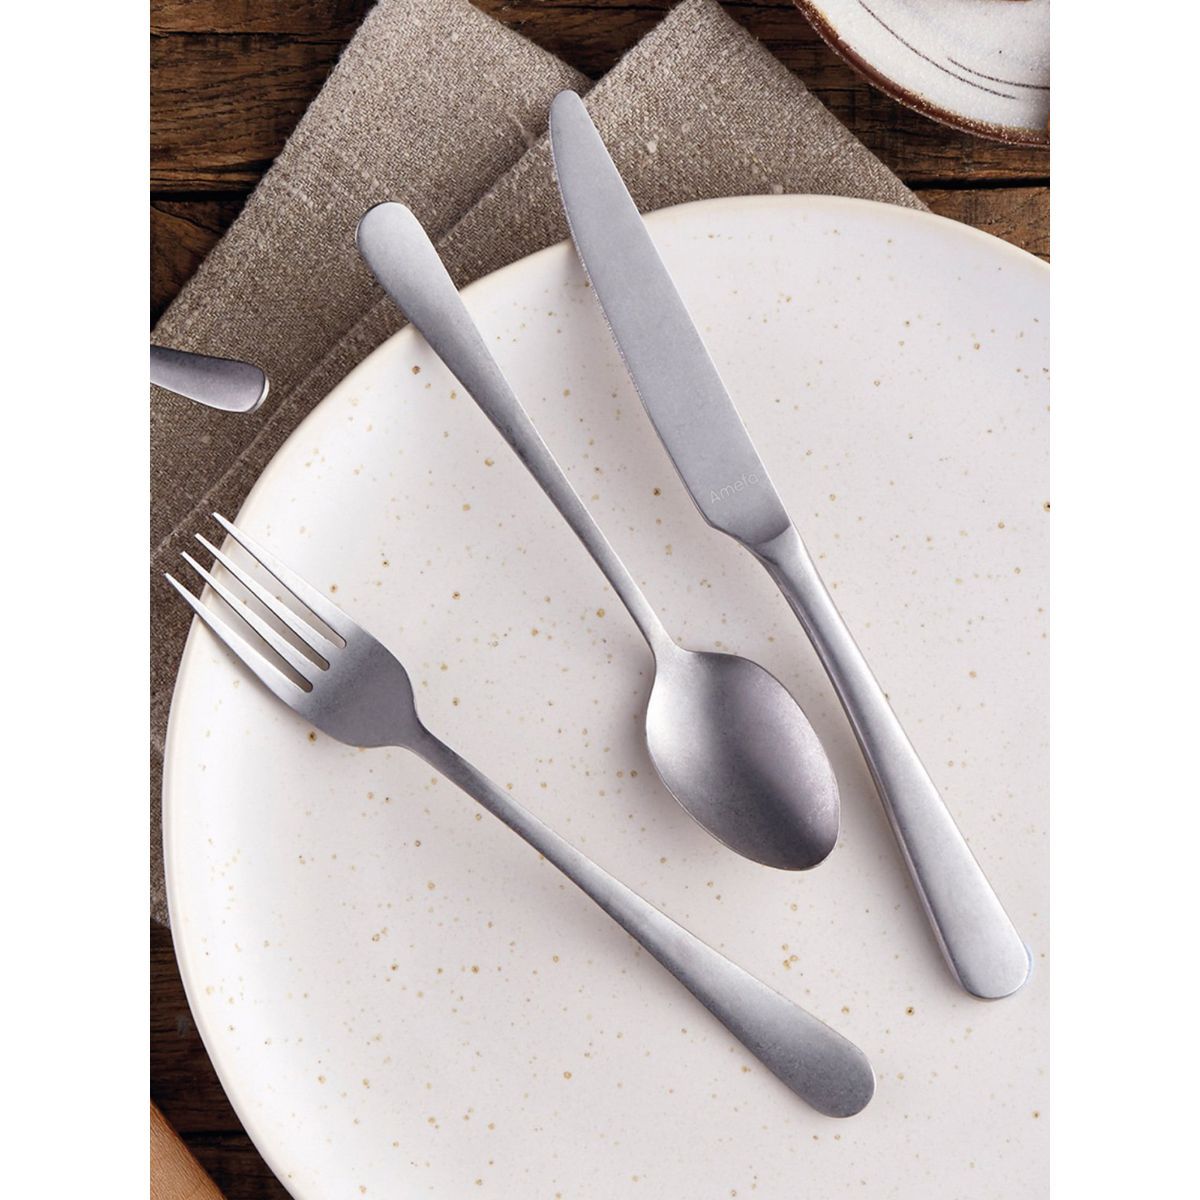 Amefa Austin Stonewash Stainless Steel Dinner Spoons Set, 12-Pieces